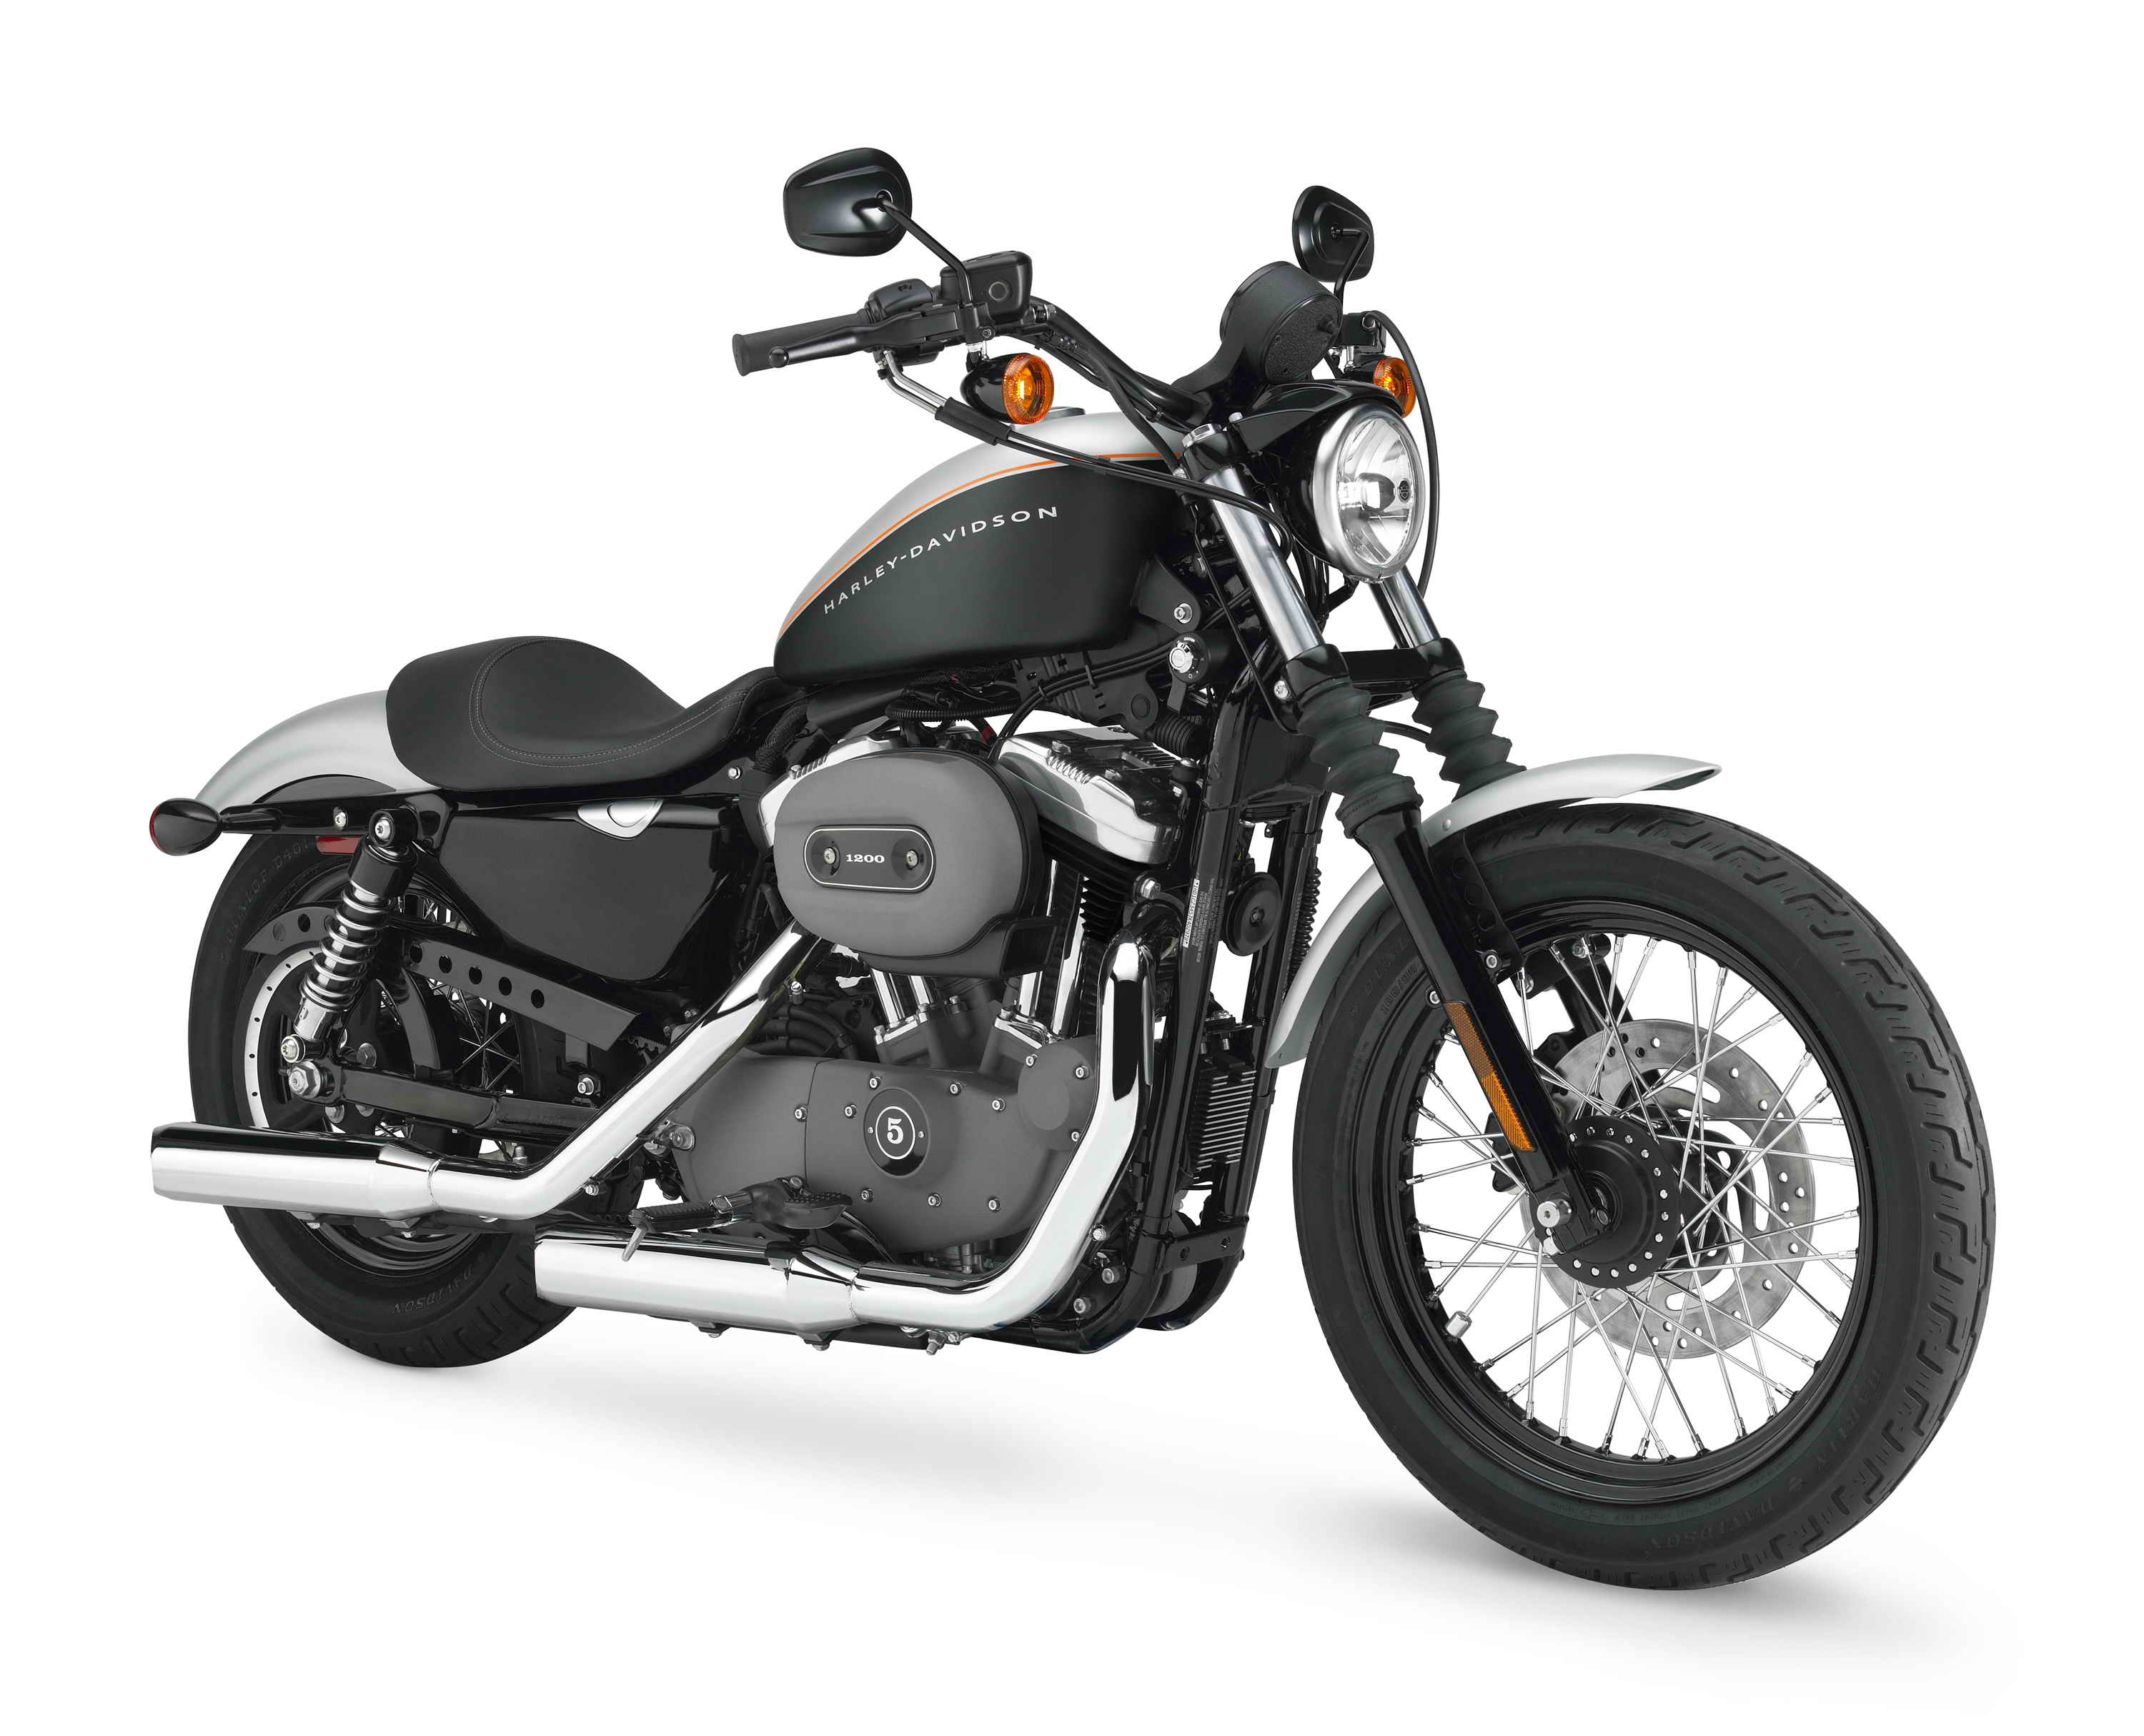 2007 Harley-Davidson XL 1200N Nightster Review - Top Speed